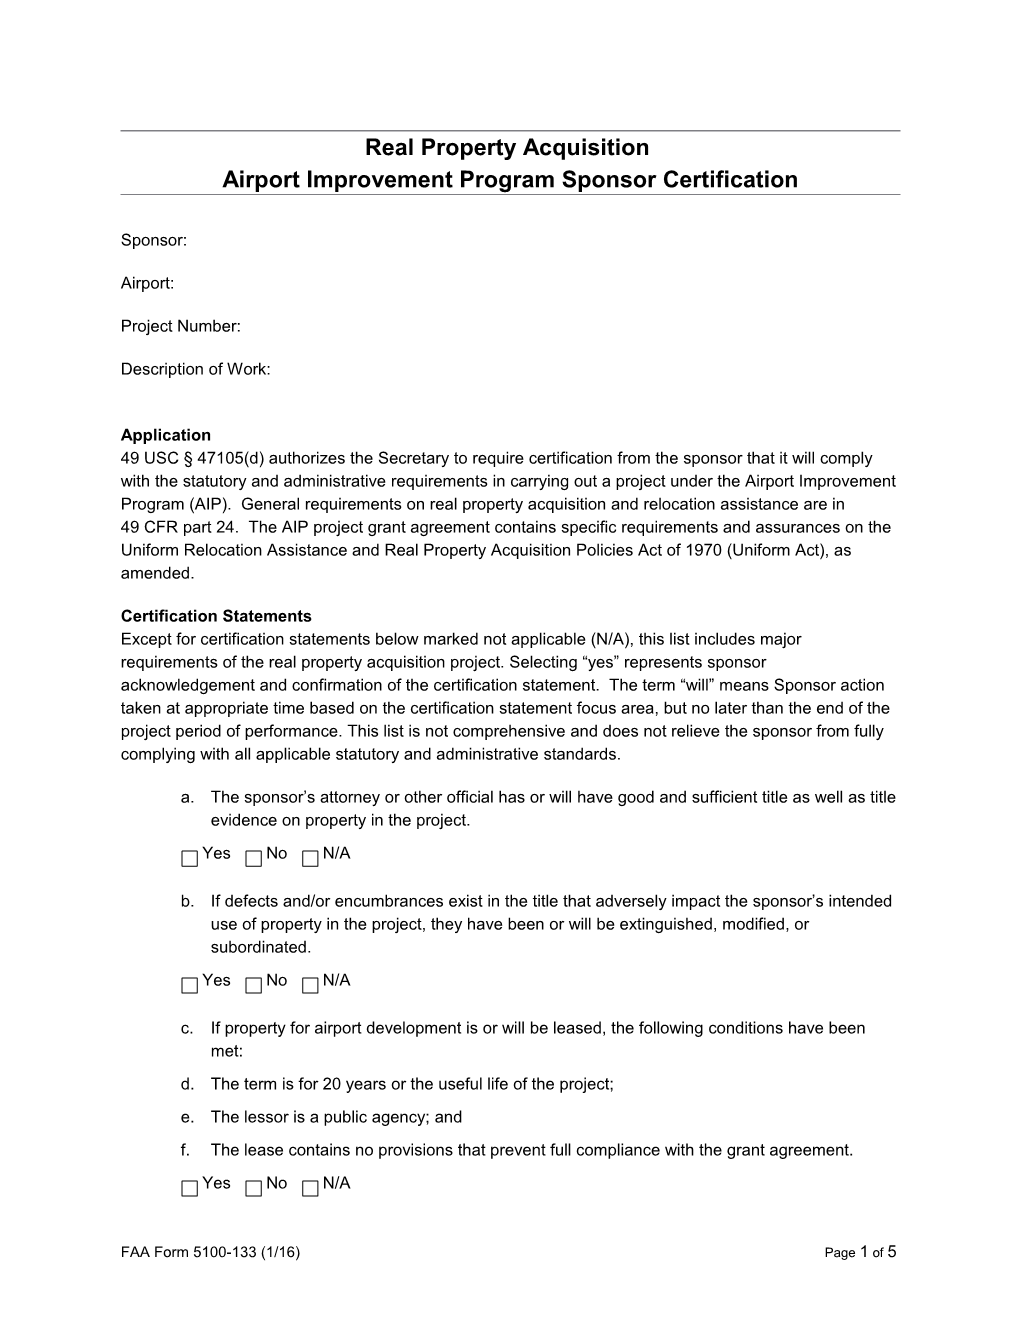 Real Property Acquisition Airport Improvement Programsponsor Certification